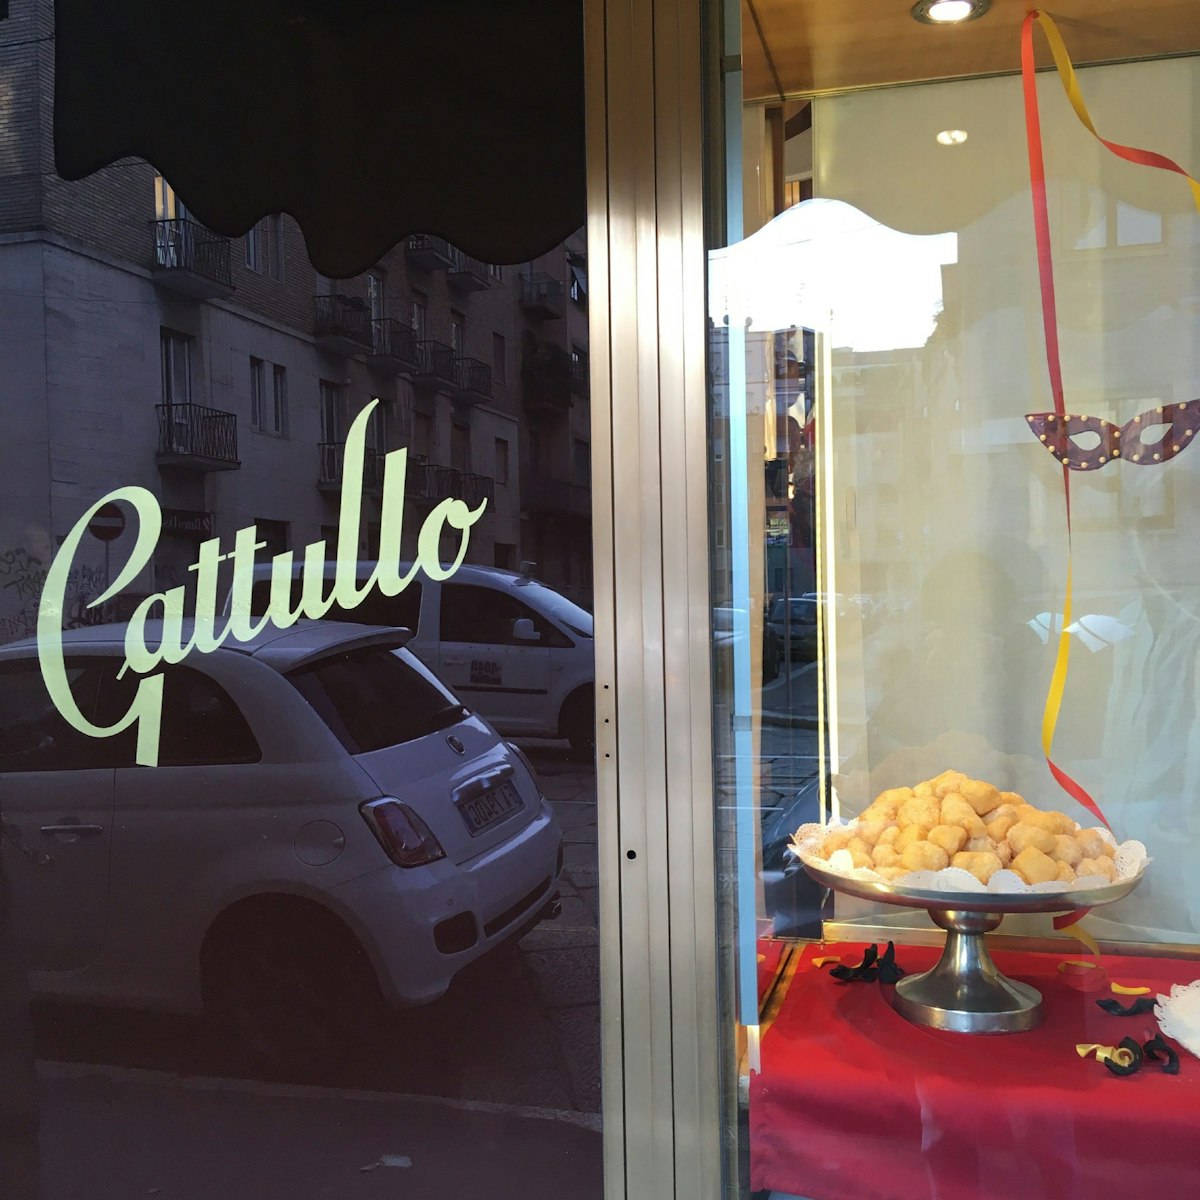 The Gattullo shop window